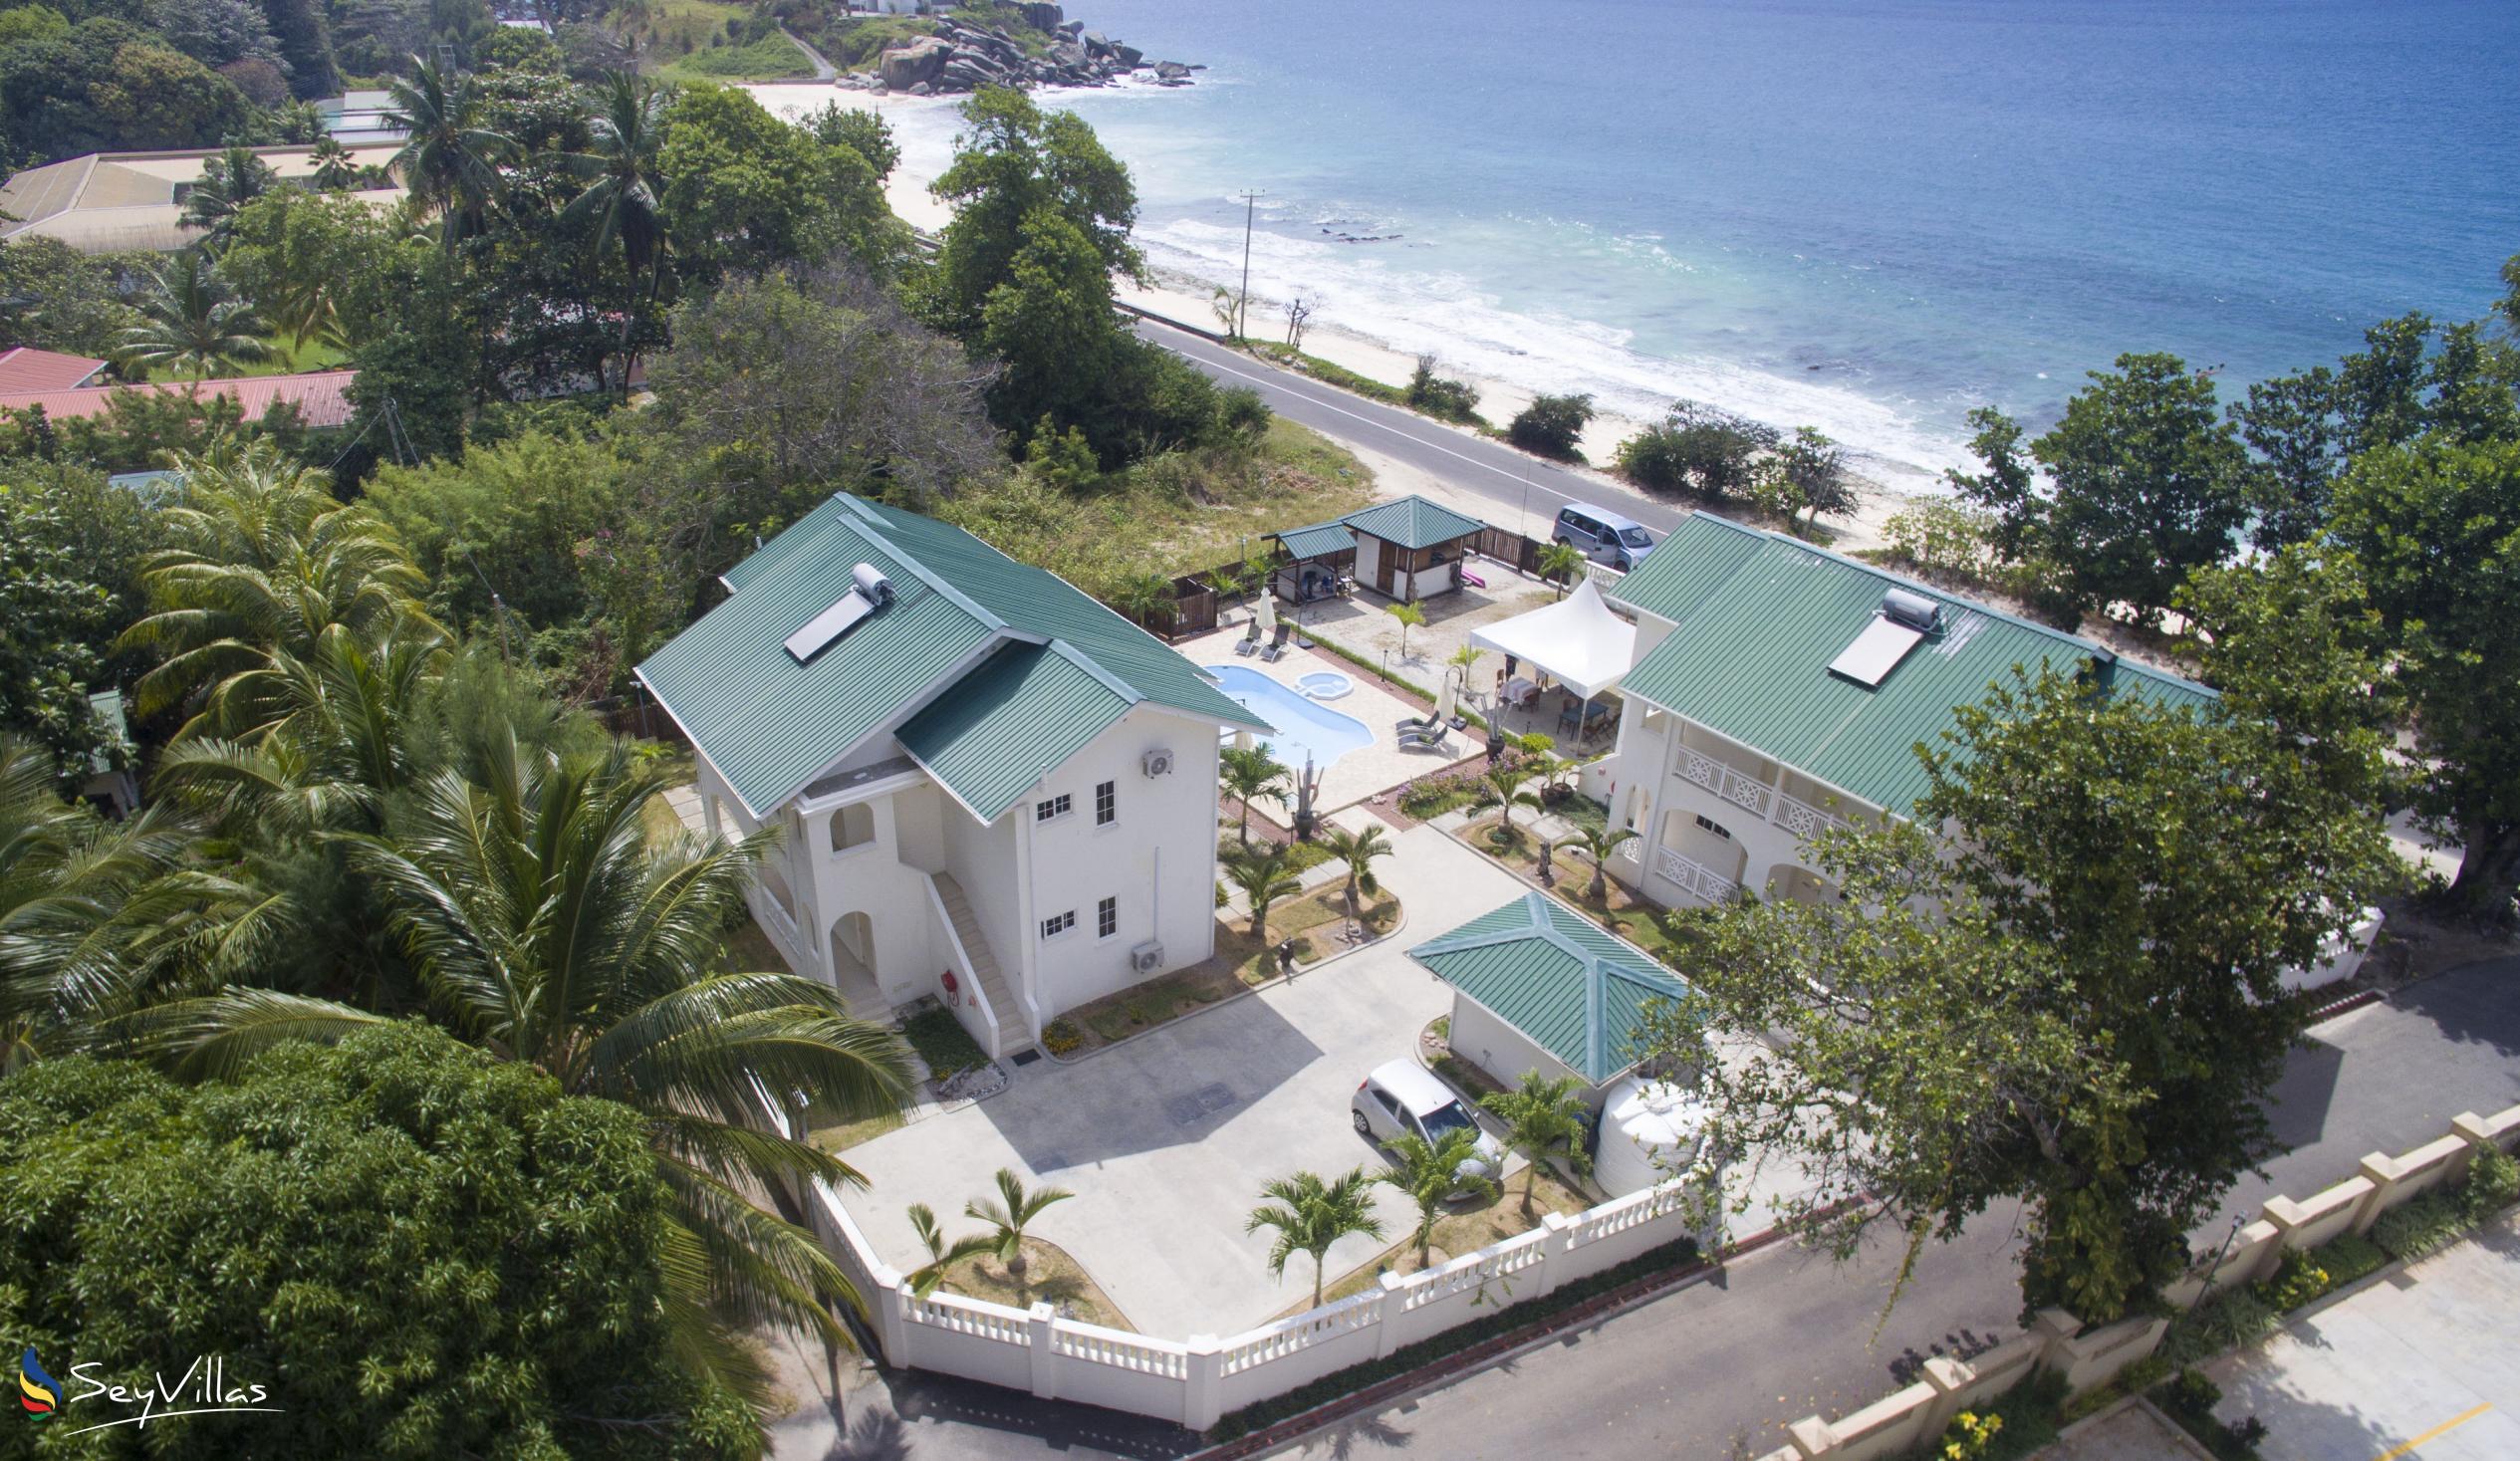 Photo 1: Villa Koket - Outdoor area - Mahé (Seychelles)